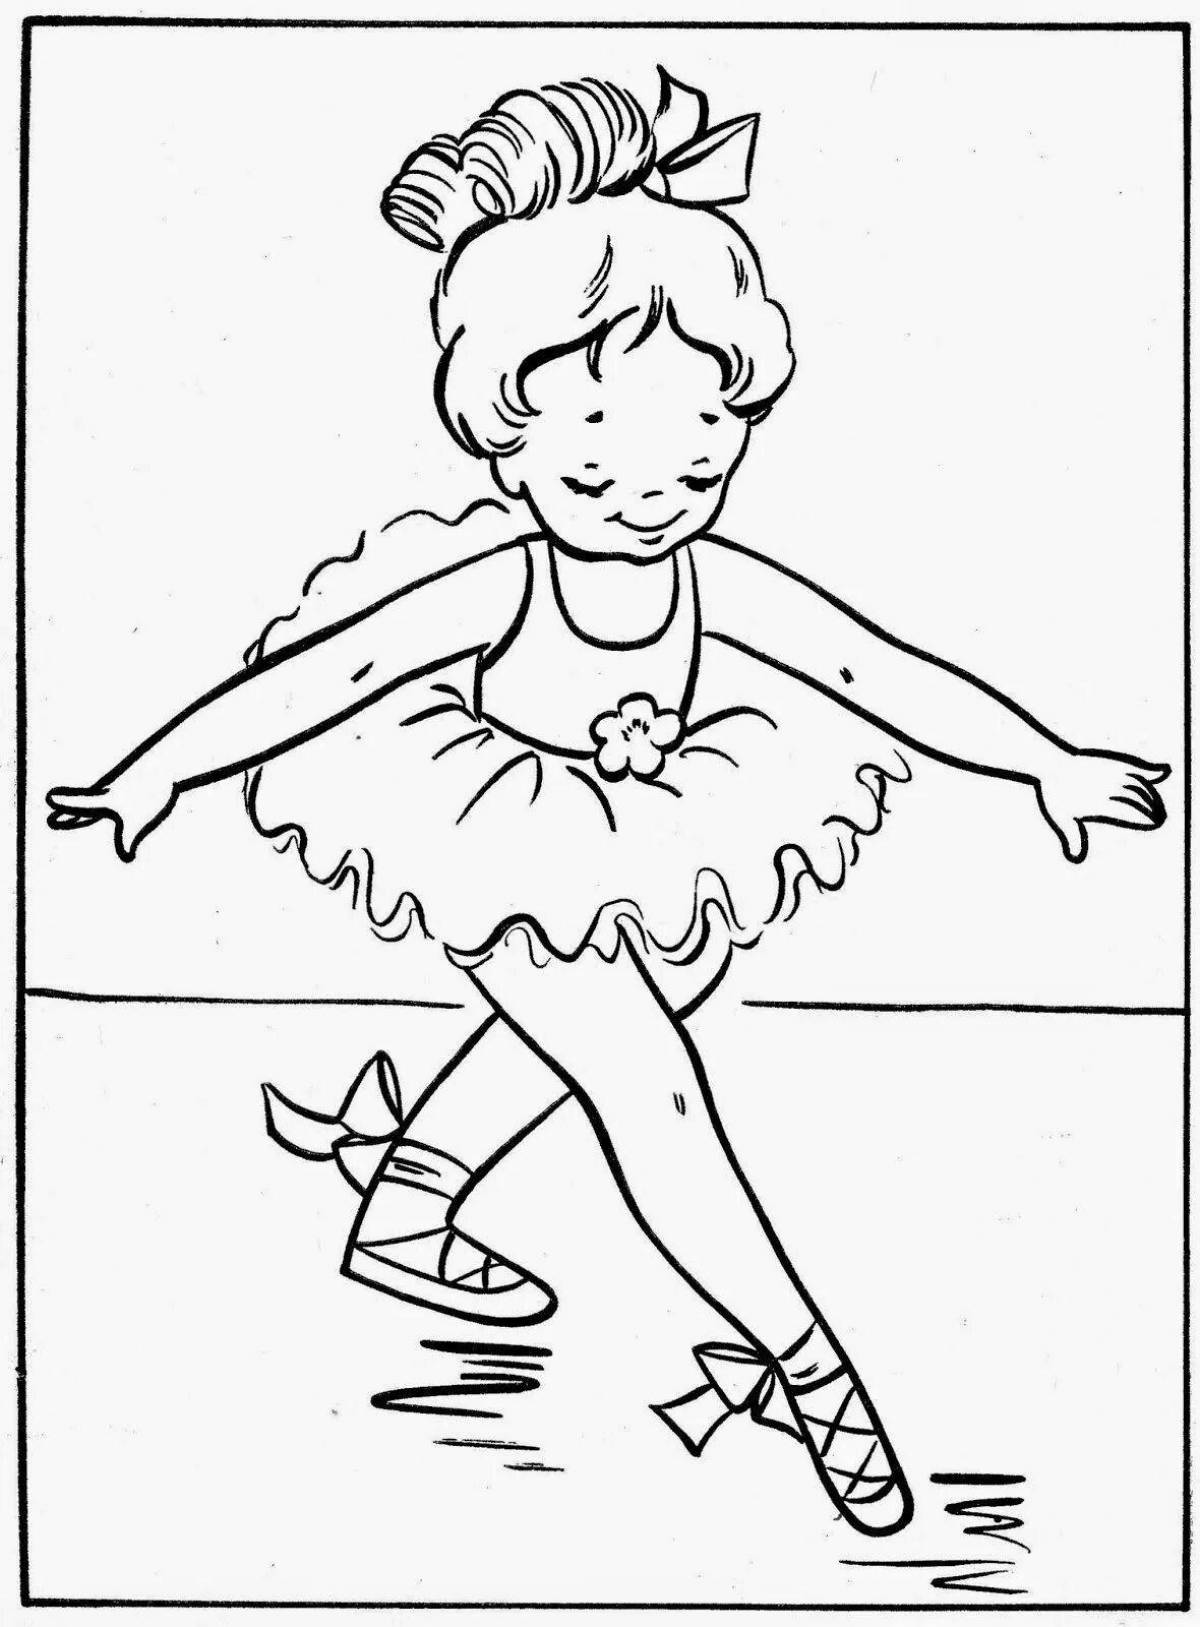 A fun ballet coloring book for kids